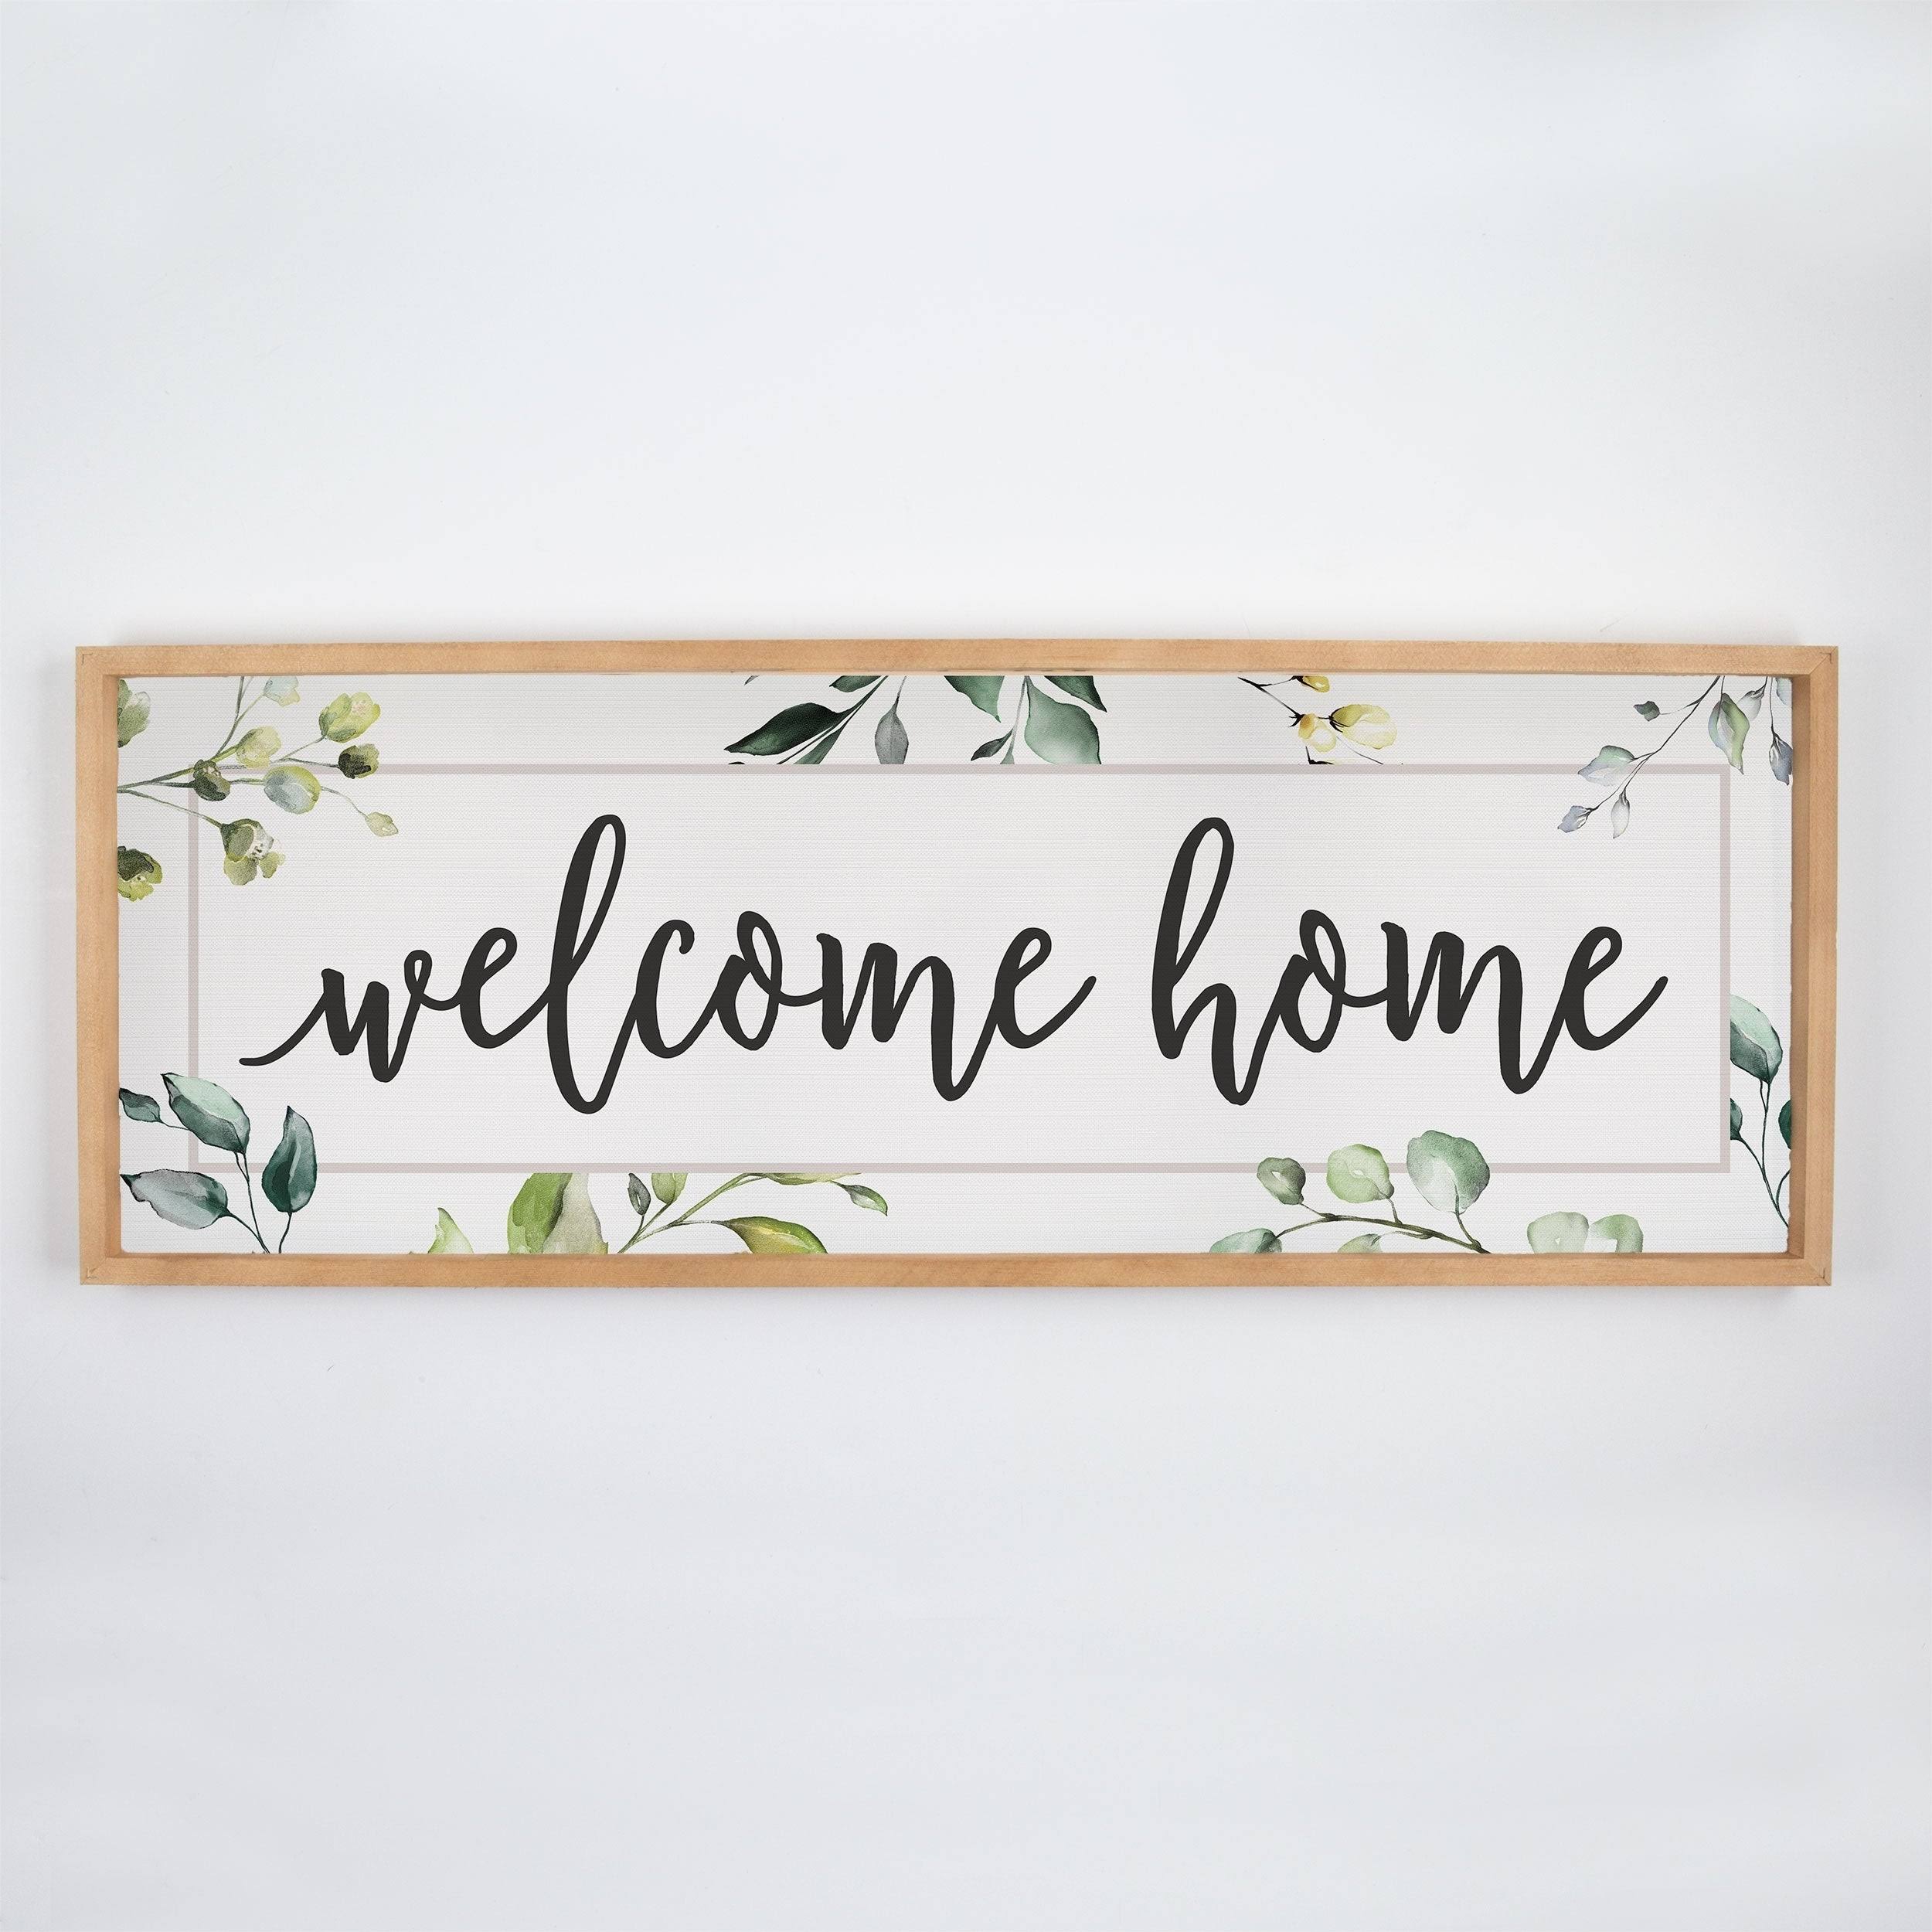 *Welcome Home Framed Art